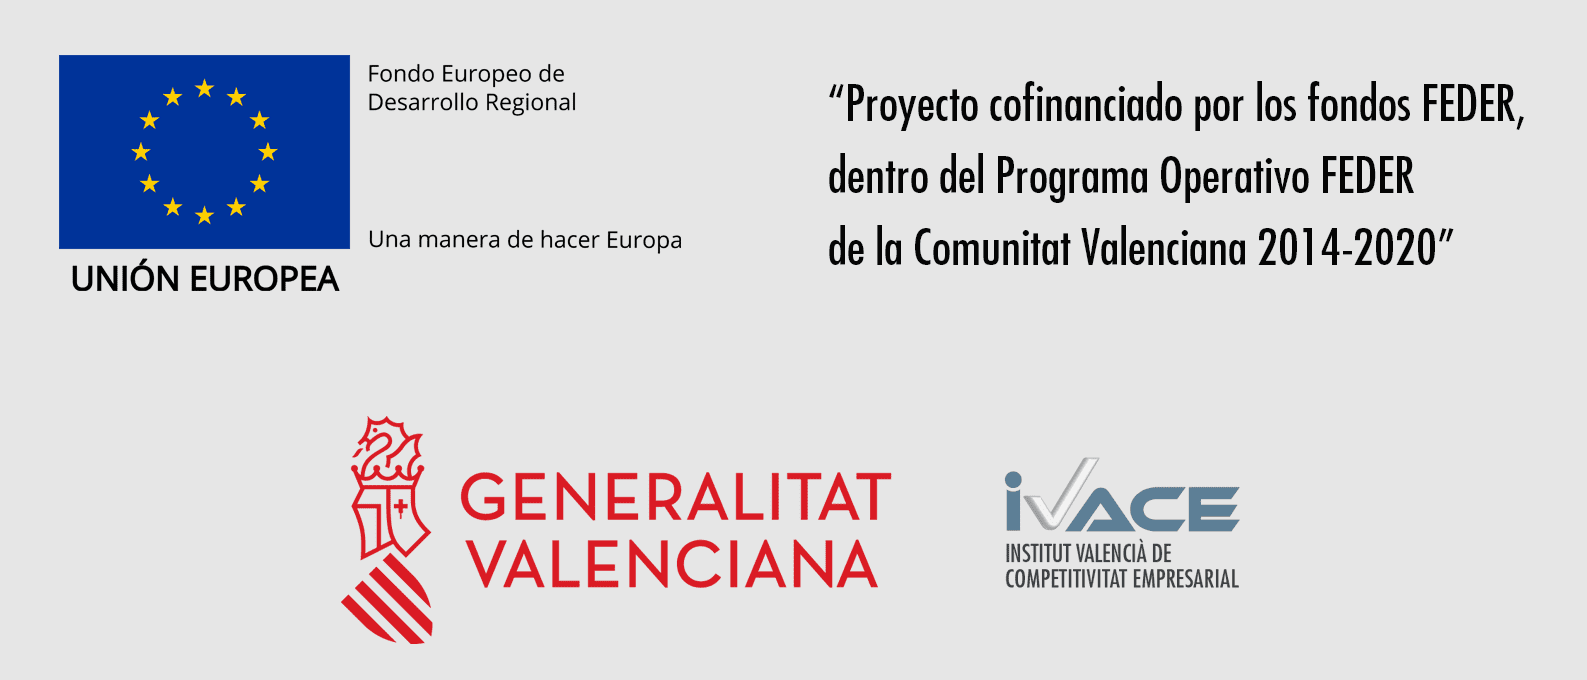 IVACE y FONDOS FEDER Generalitat Valenciana